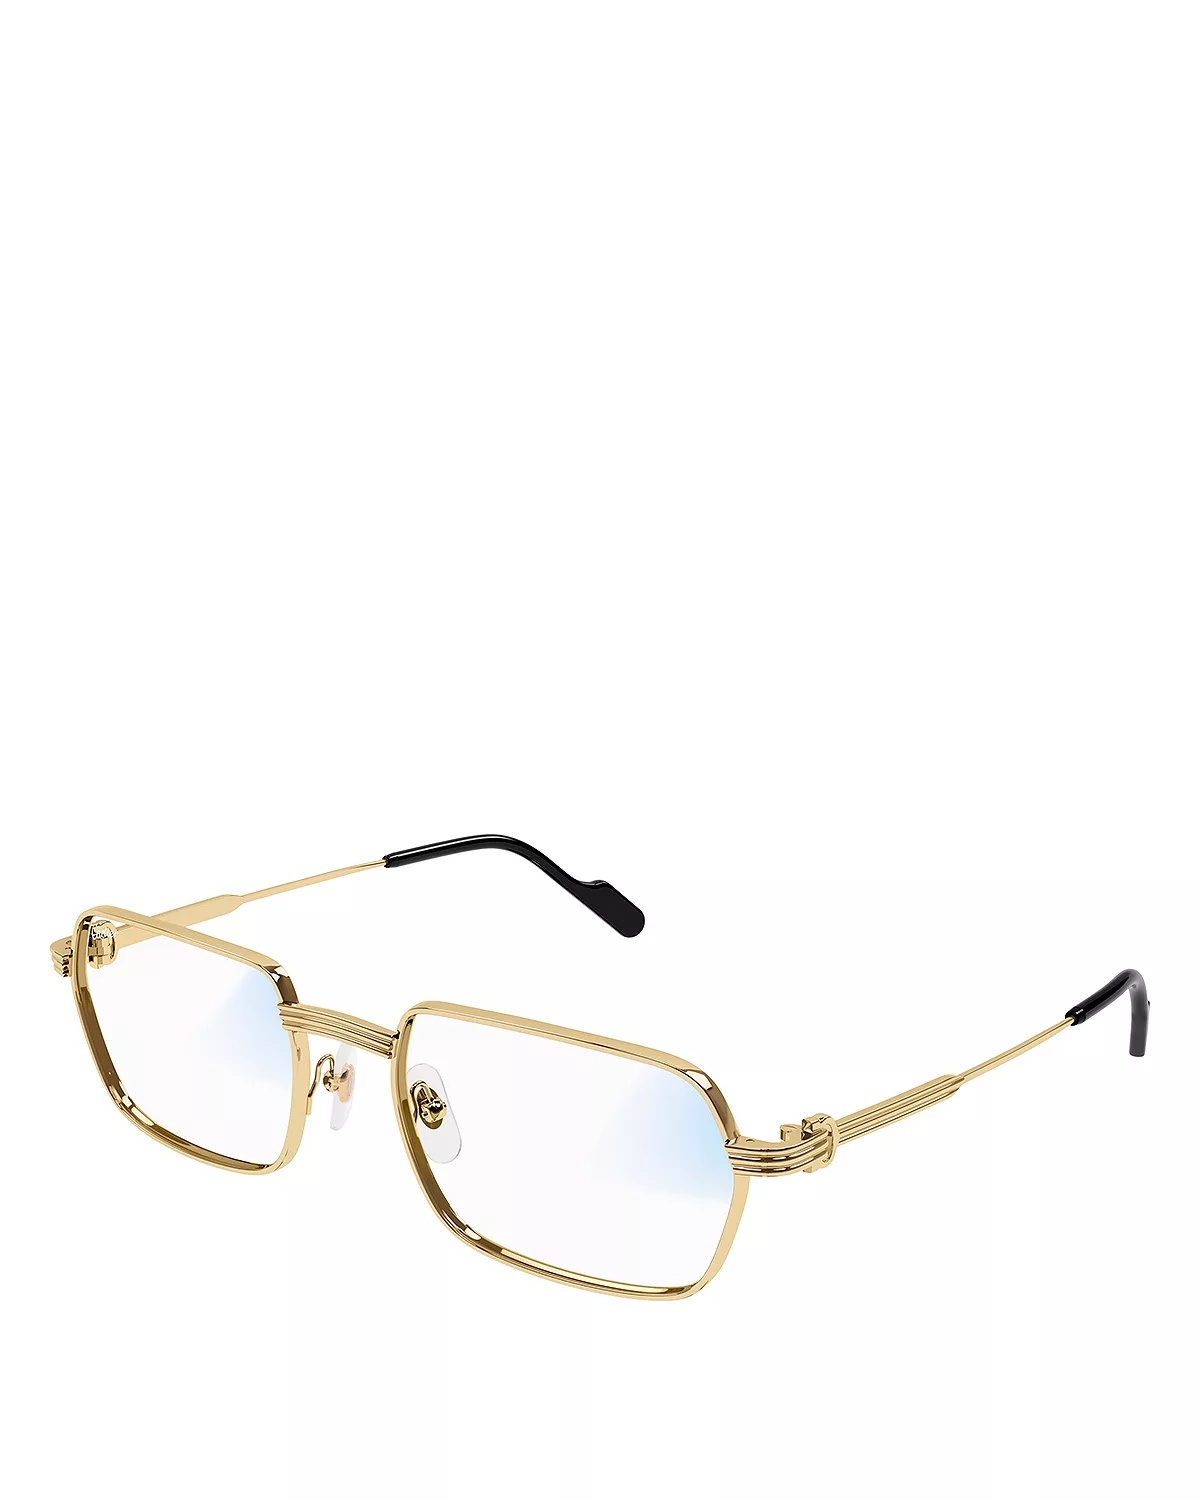 Premiere De Cartier 24 Carat Gold Plated Photochromatic Rectangular Sunglasses, 56mm - 1